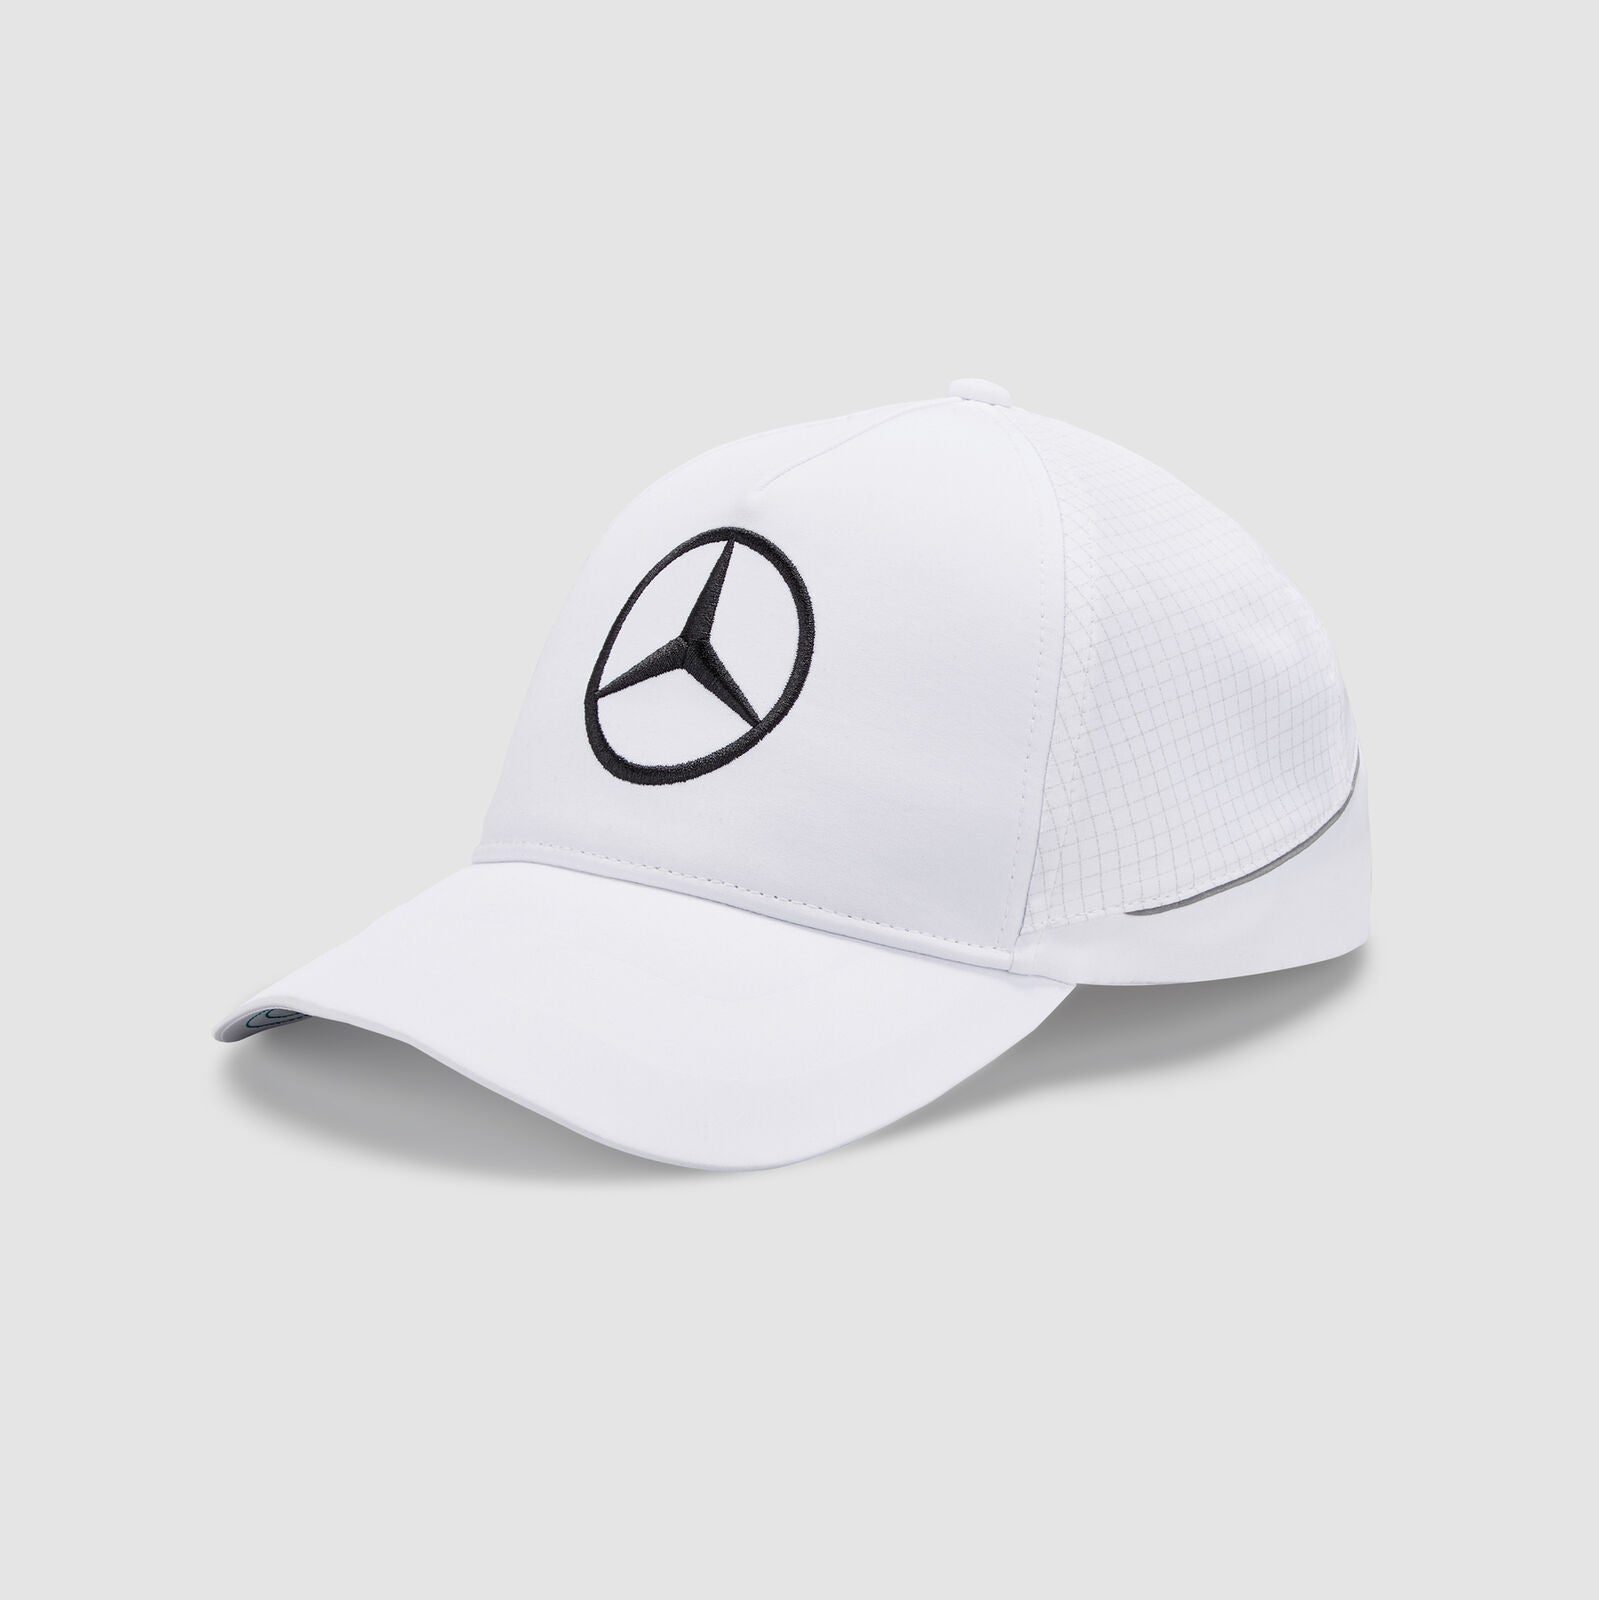 Mercedes 2022 Team Baseball Cap